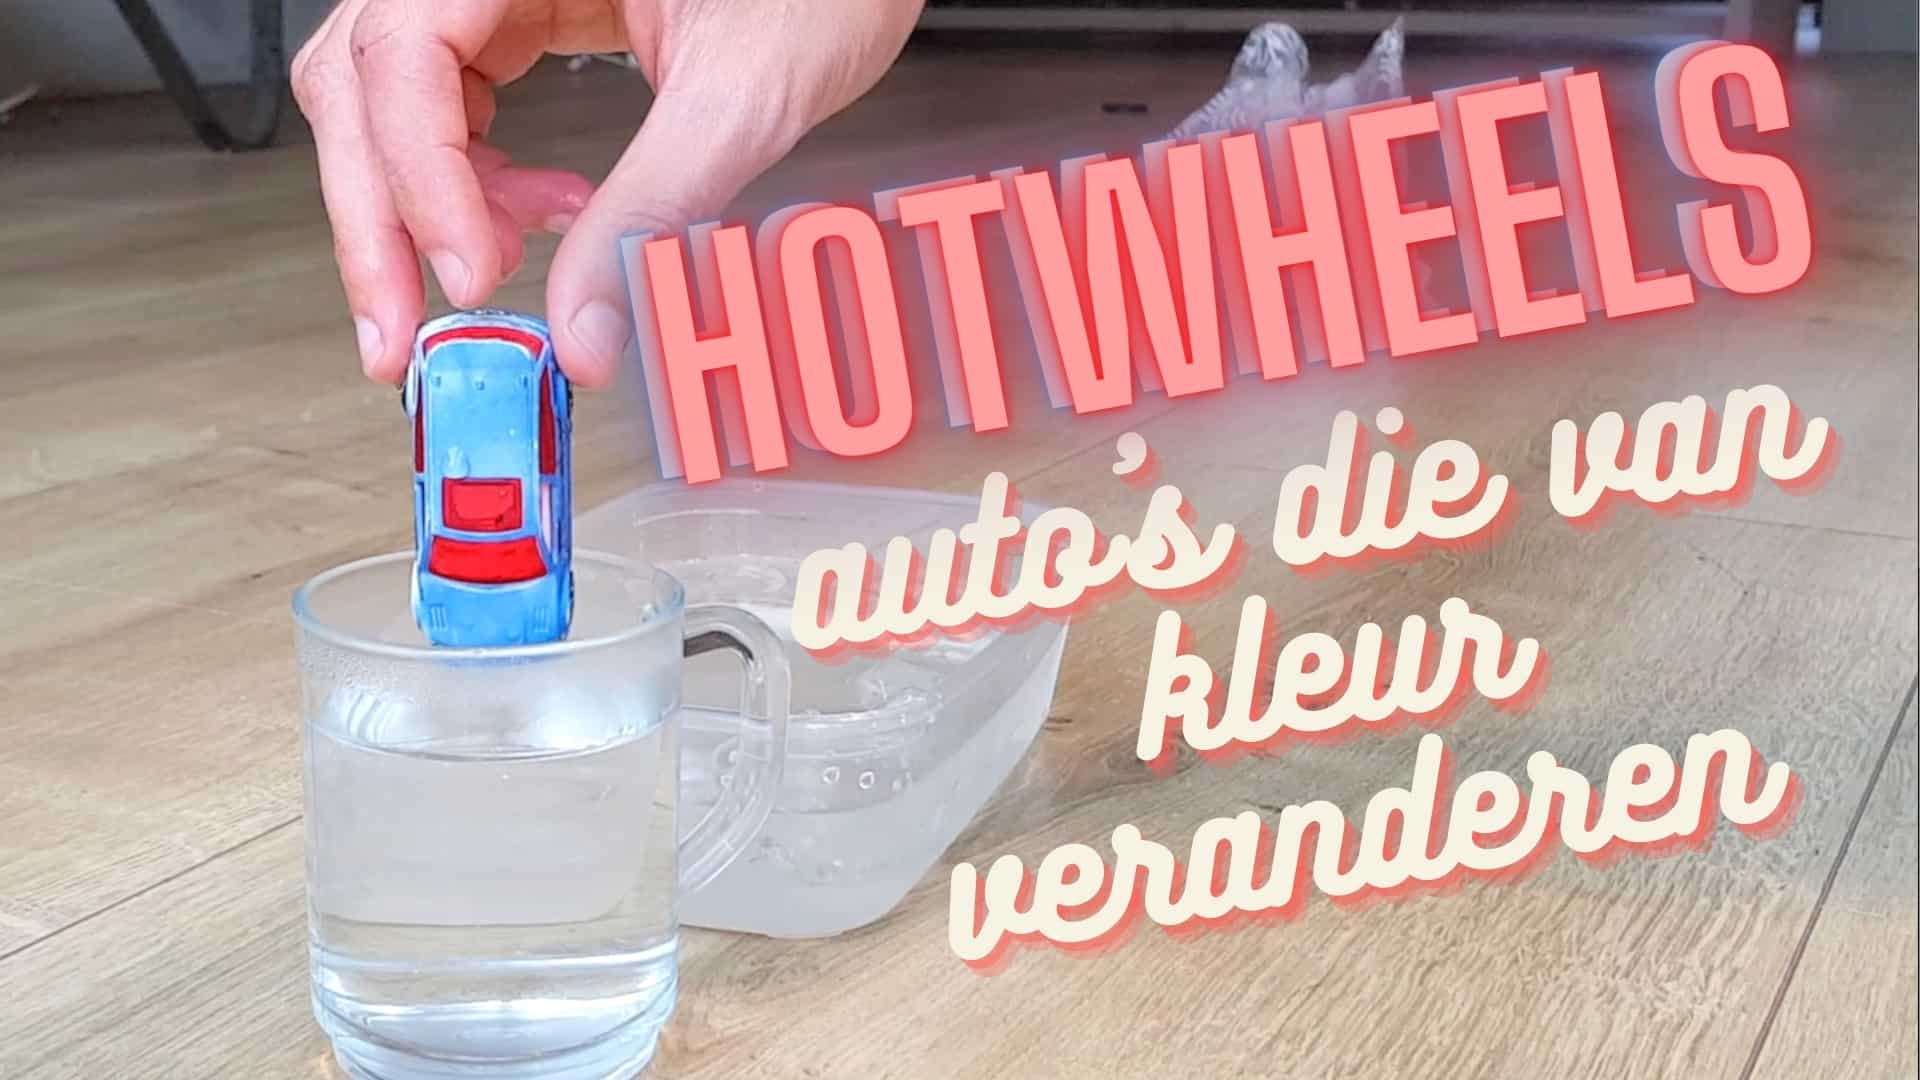 Hotwheels cars that change color